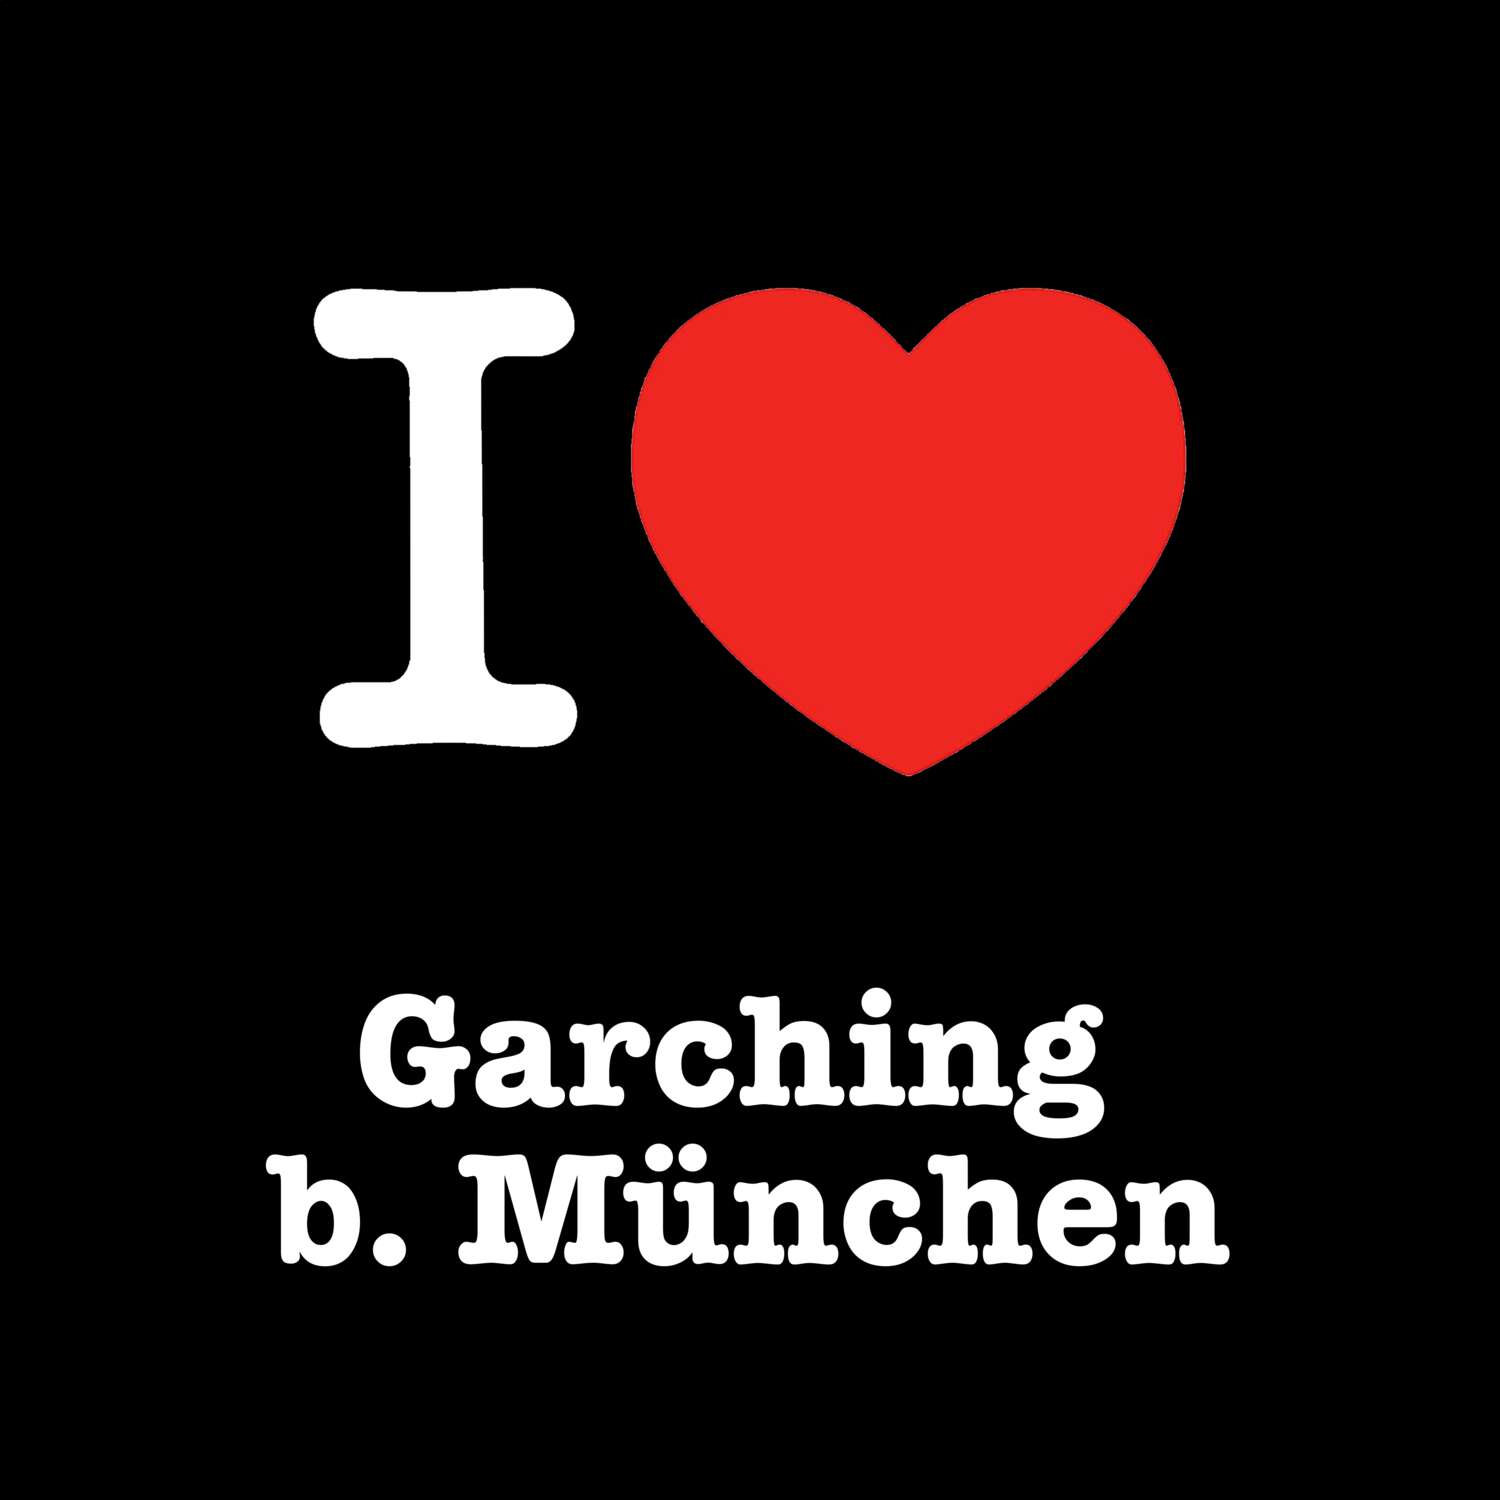 Garching b. München T-Shirt »I love«